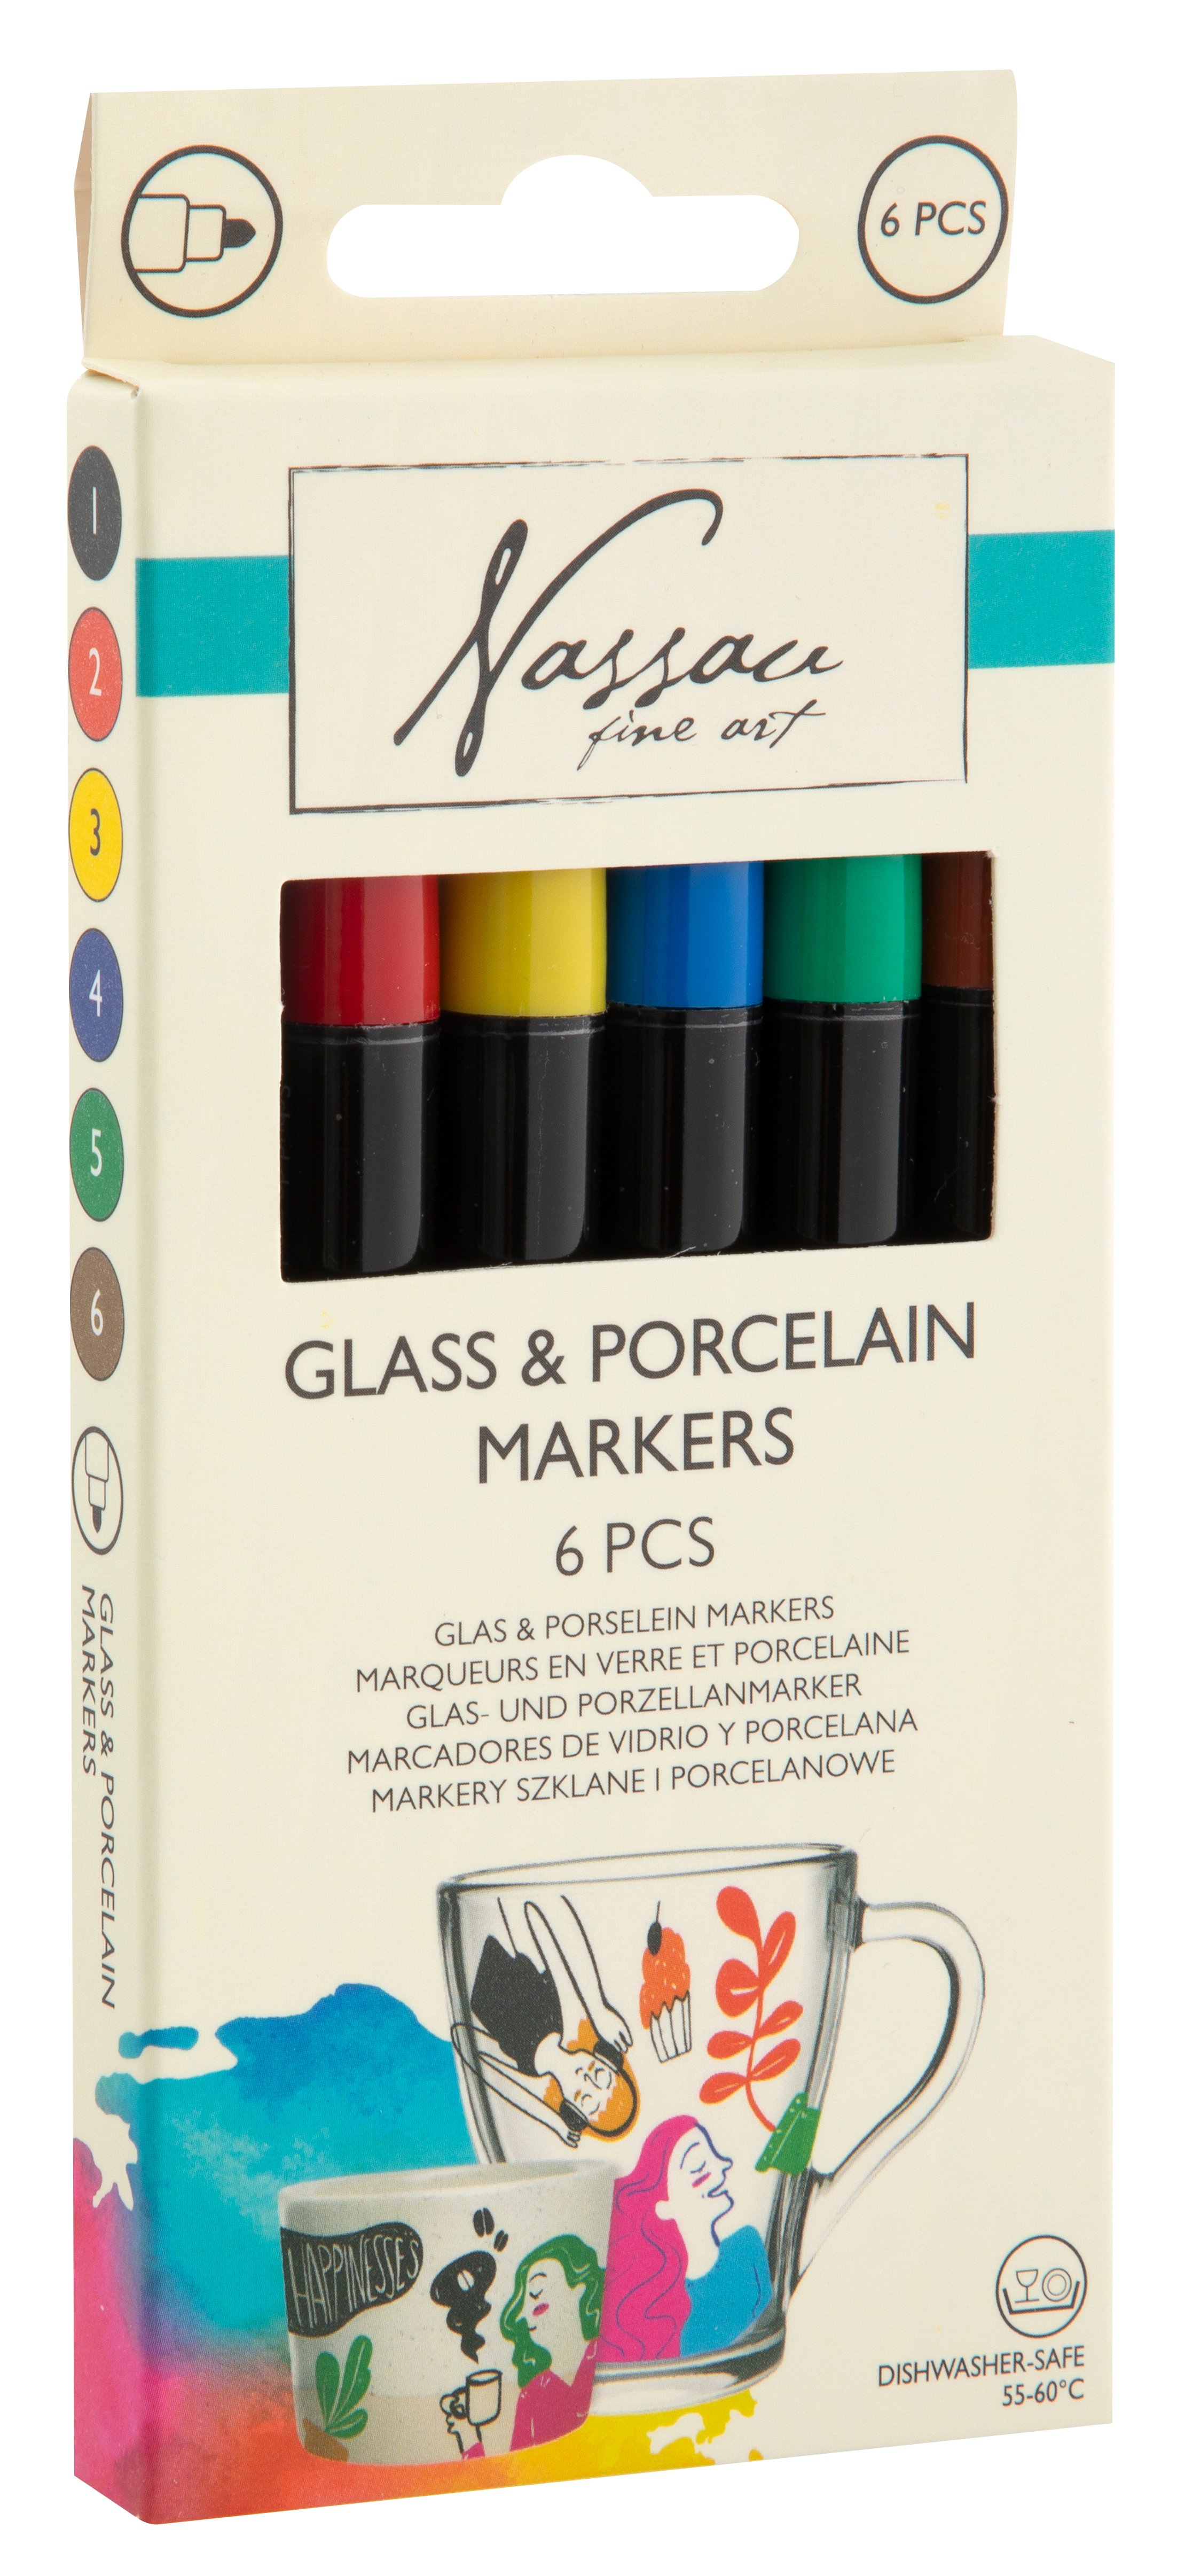 Nassau - Glass&porcelain markers (6 pcs) (AR0138/GE) - Leker